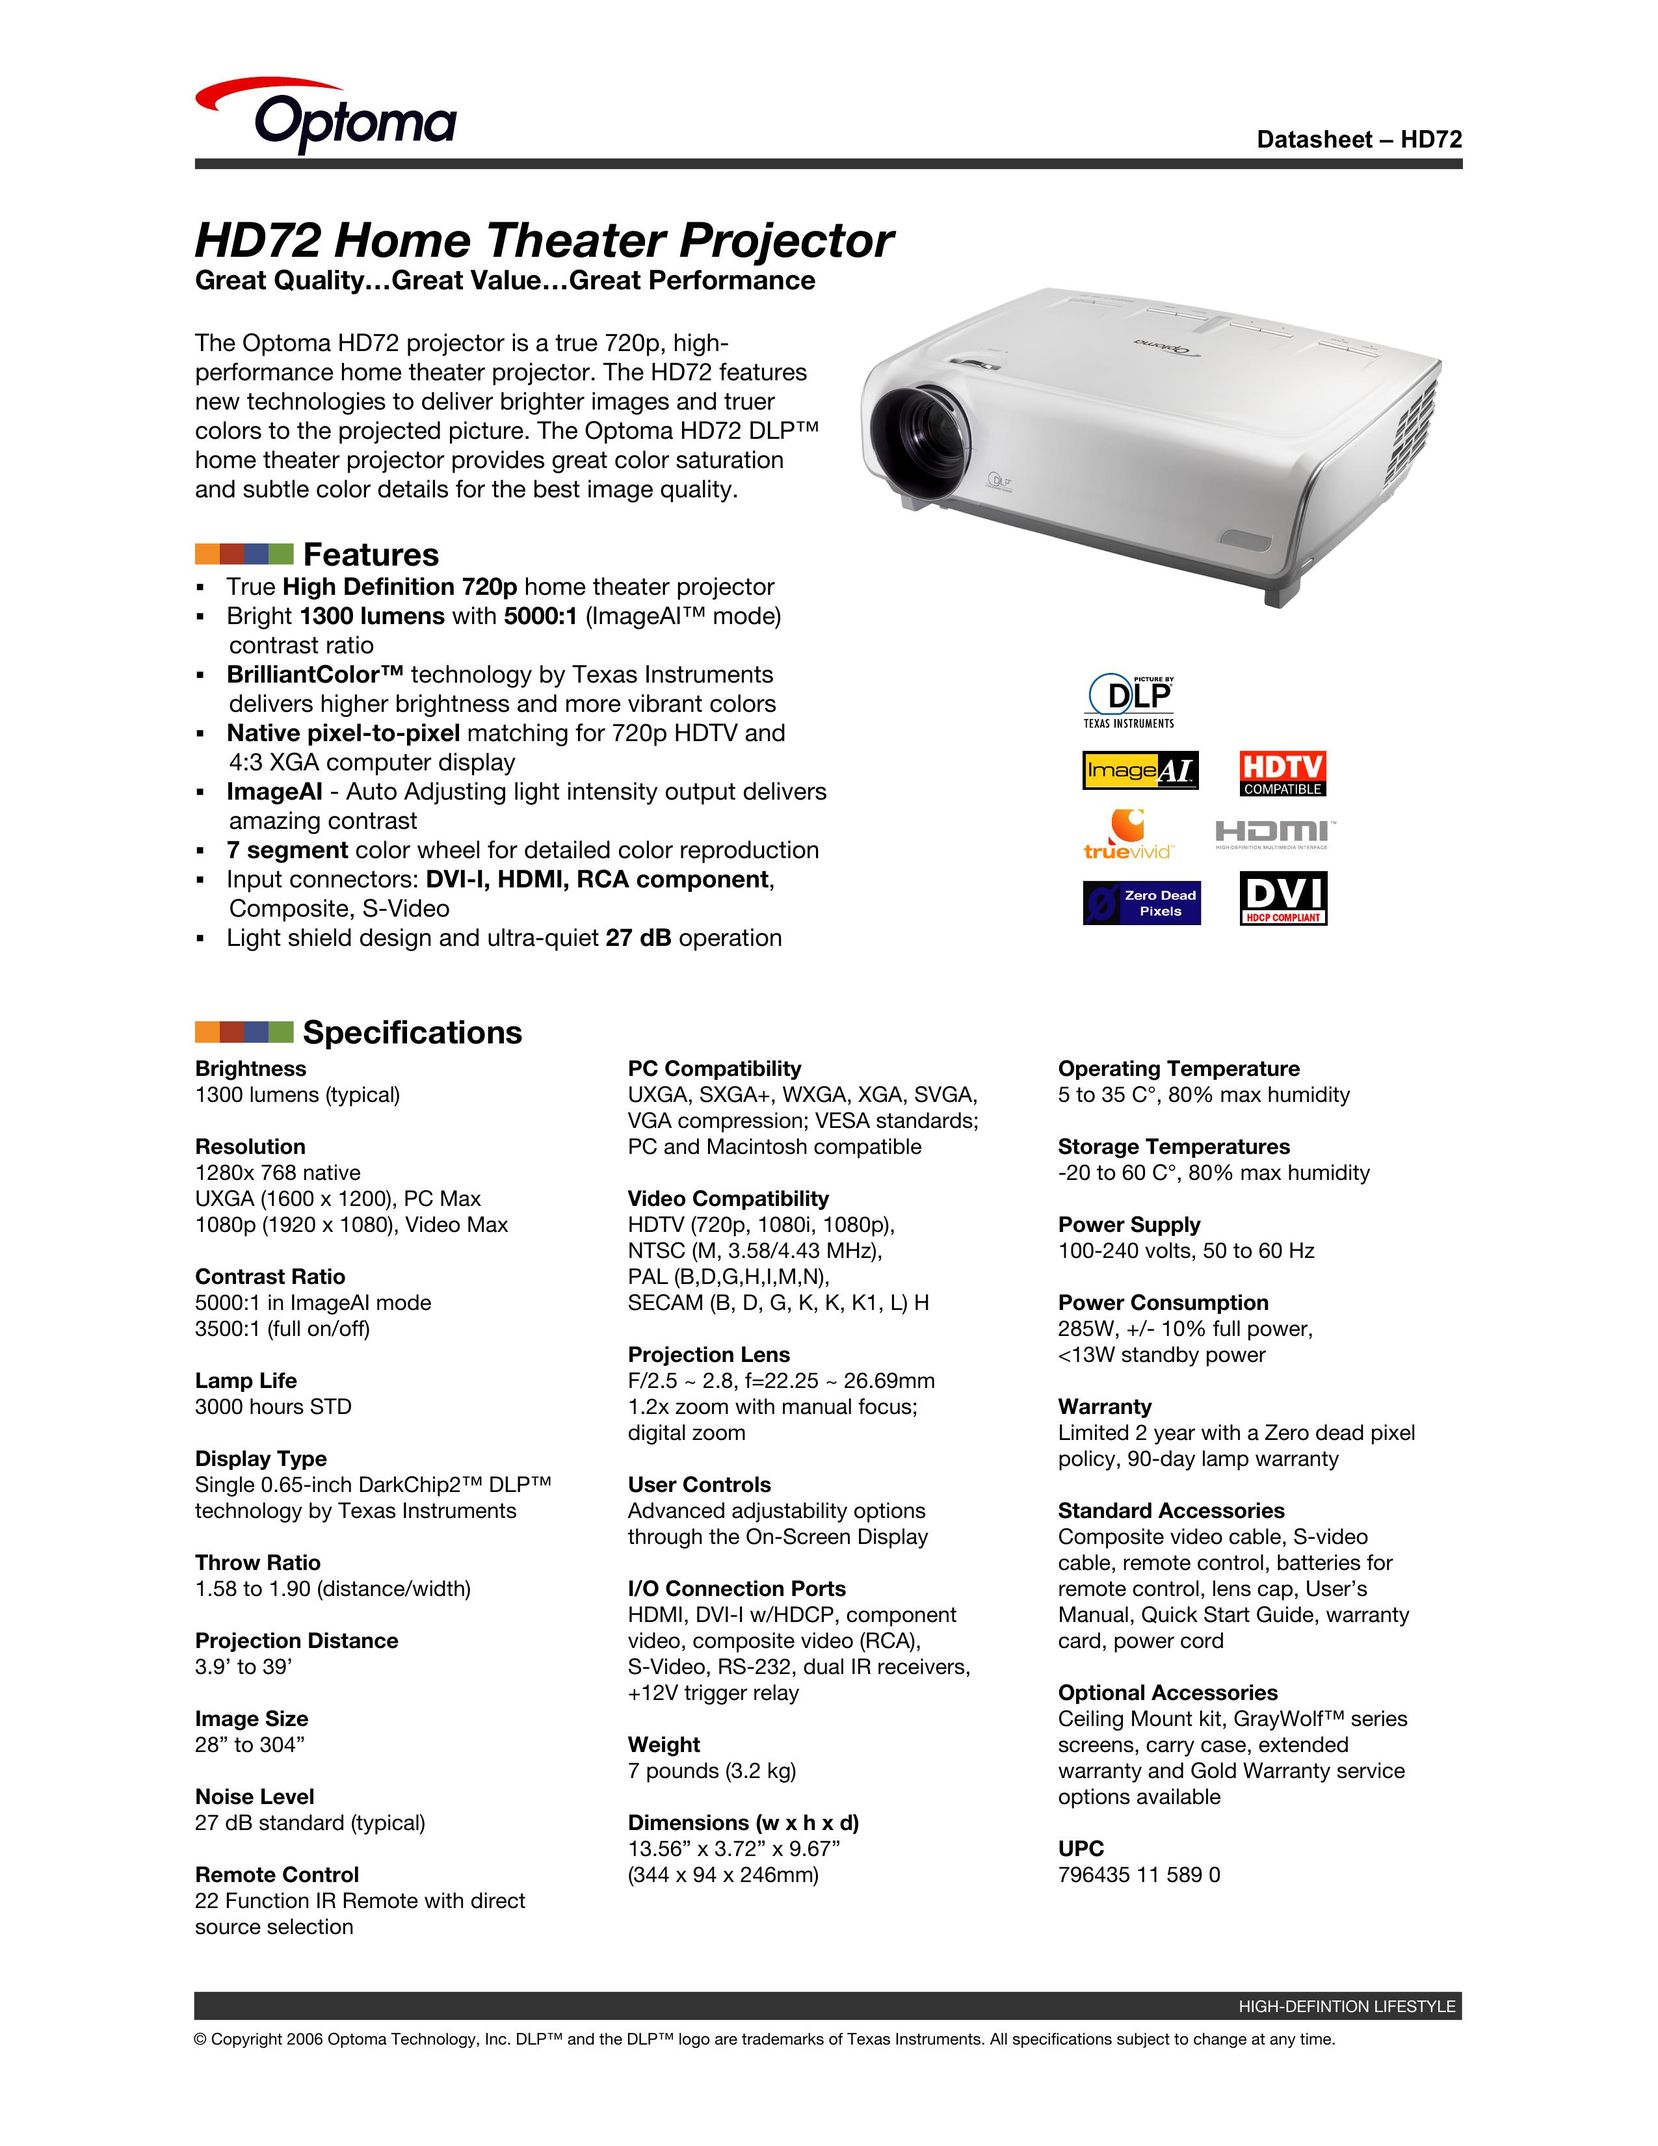 Lumens Technology HD72 Projector User Manual